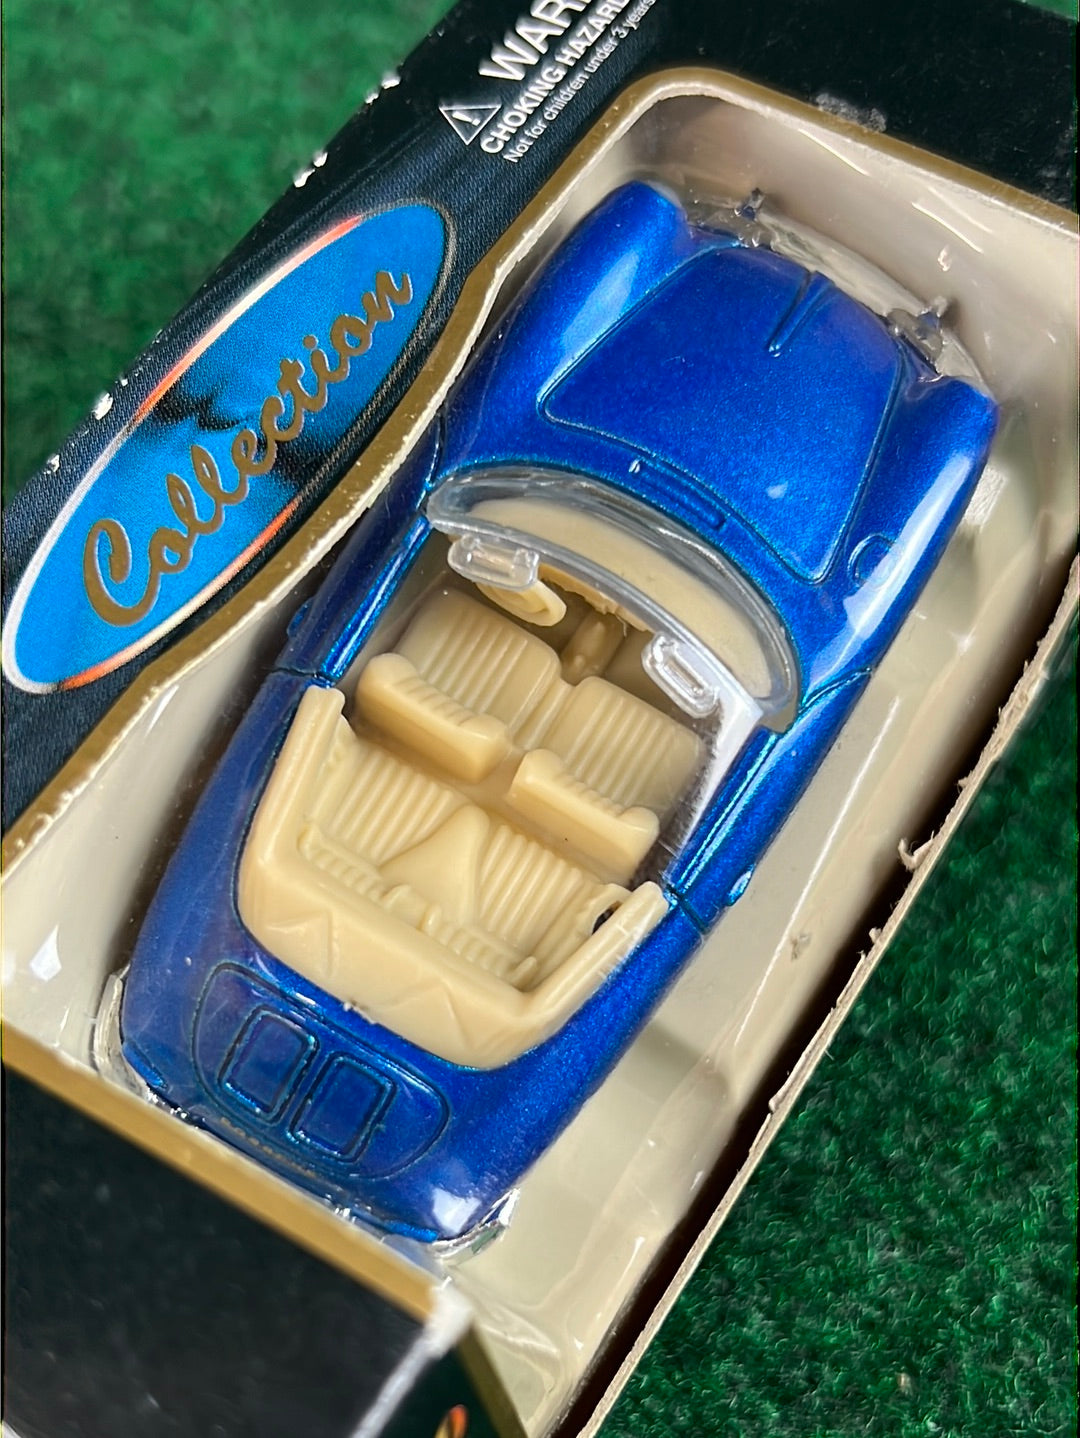 majorette & Welly - Porsche 911 Turbo & 356 Toy Car Set